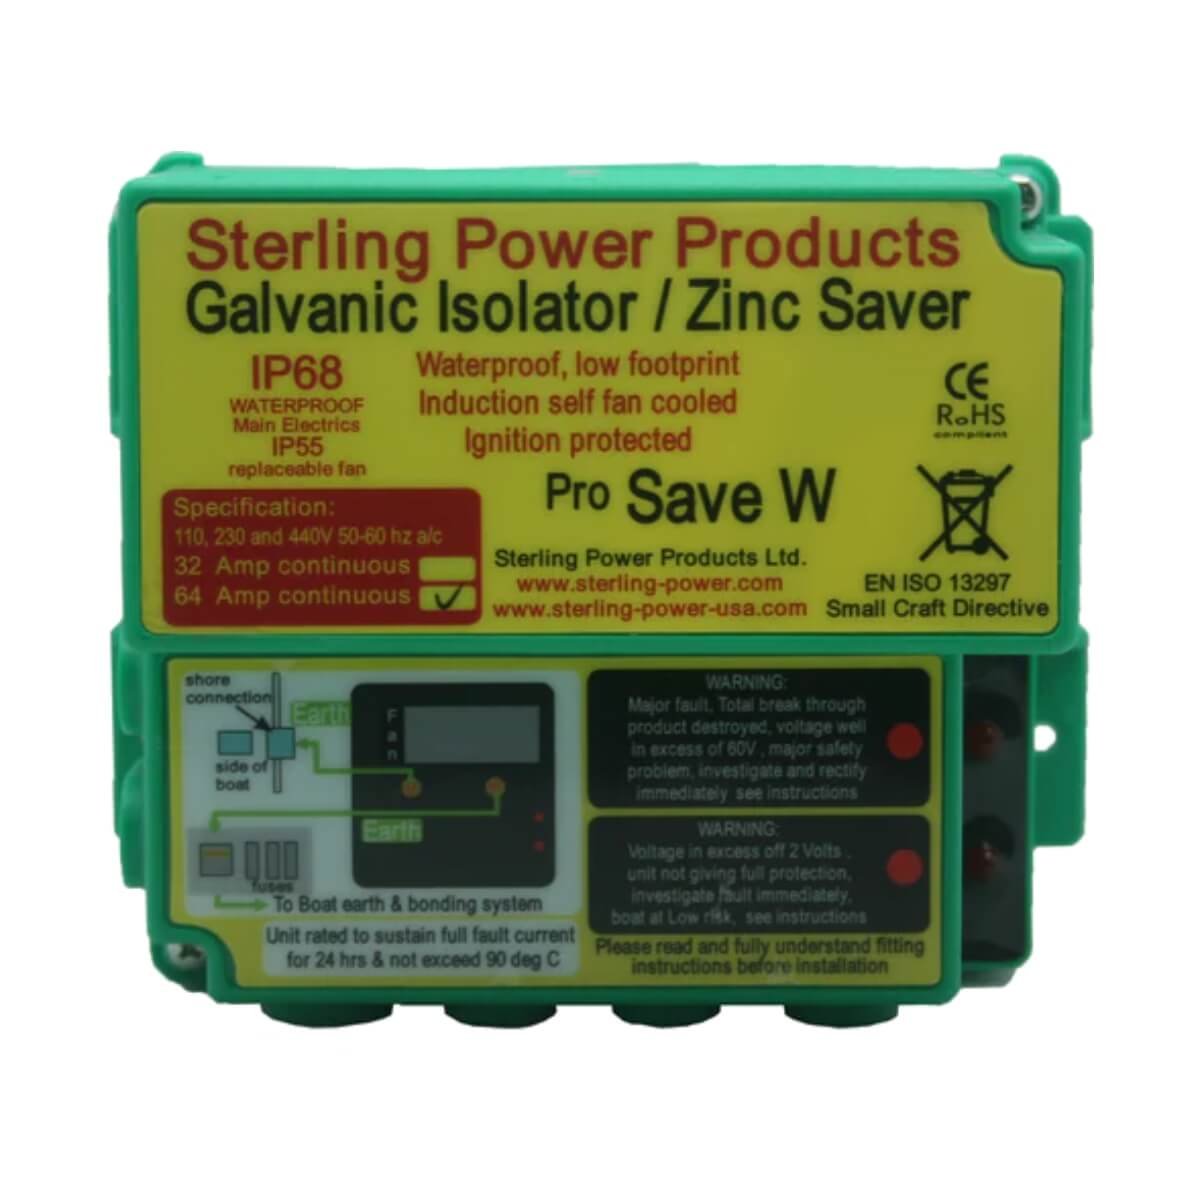 Sterling Galvanic Isolator 64A - Zinc Saver - Pro Save W (Waterproof)